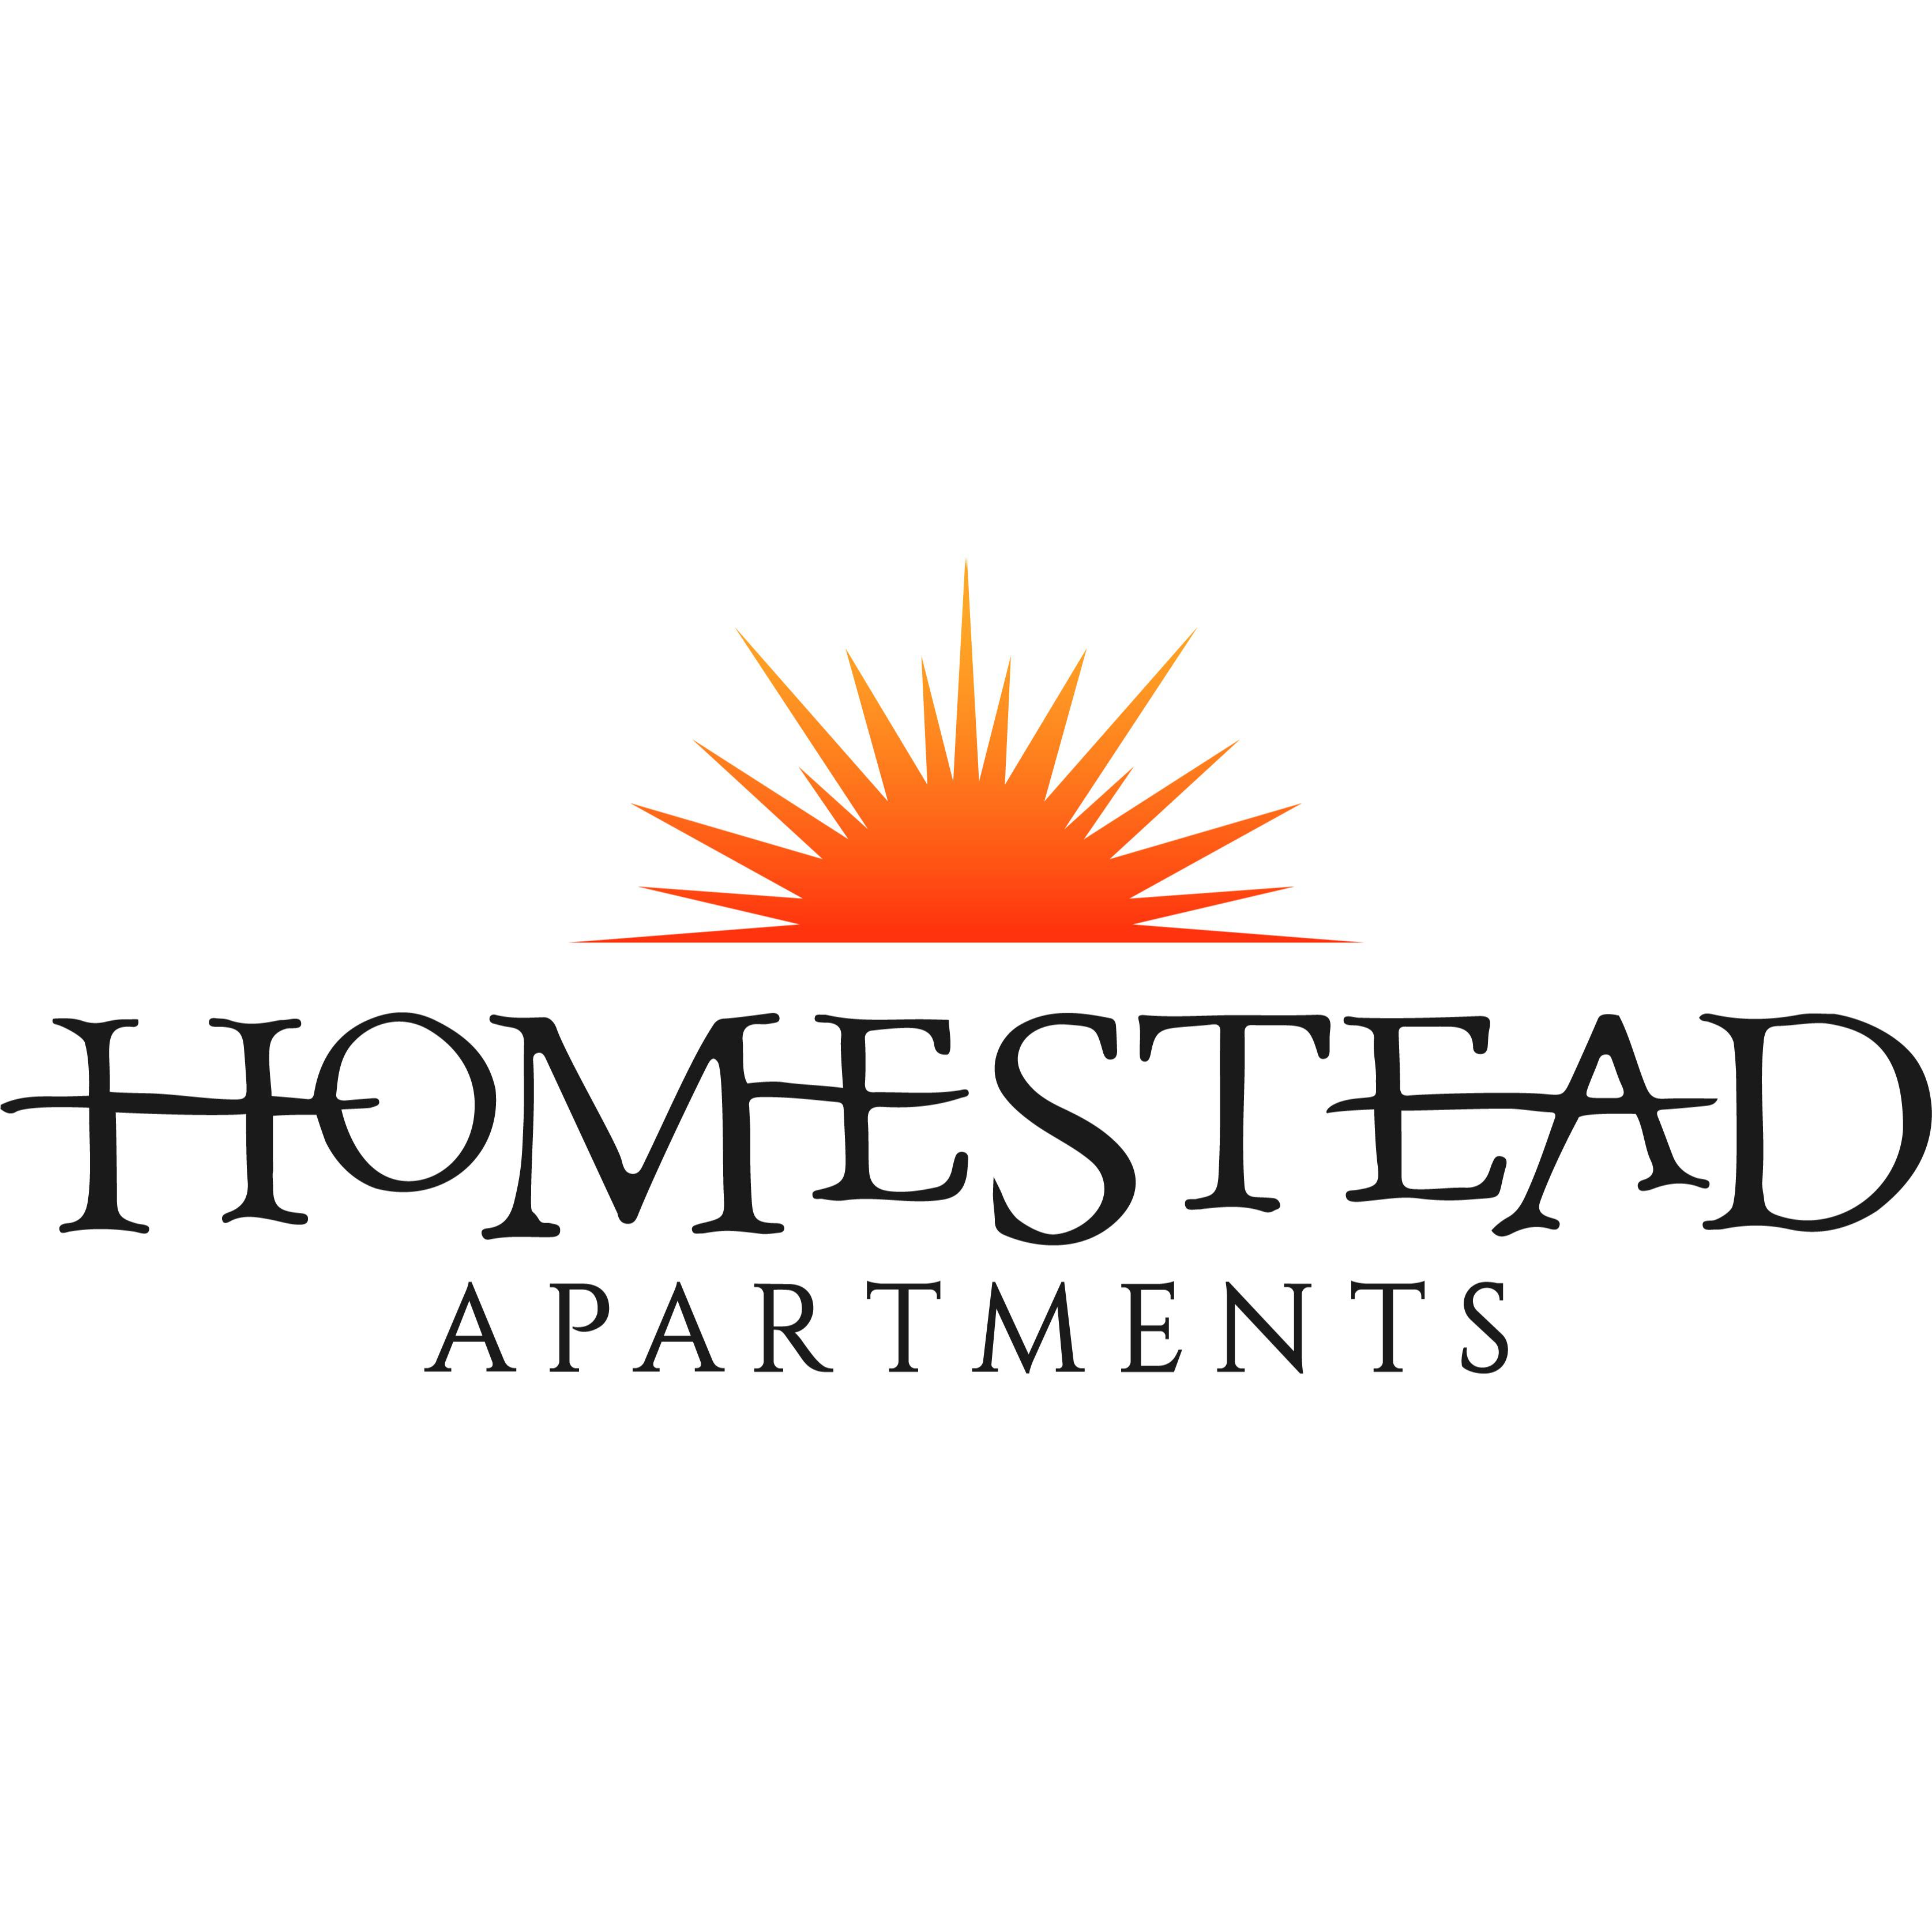 Homestead Apartments - Hobbs, NM 88240 - (575)741-2815 | ShowMeLocal.com